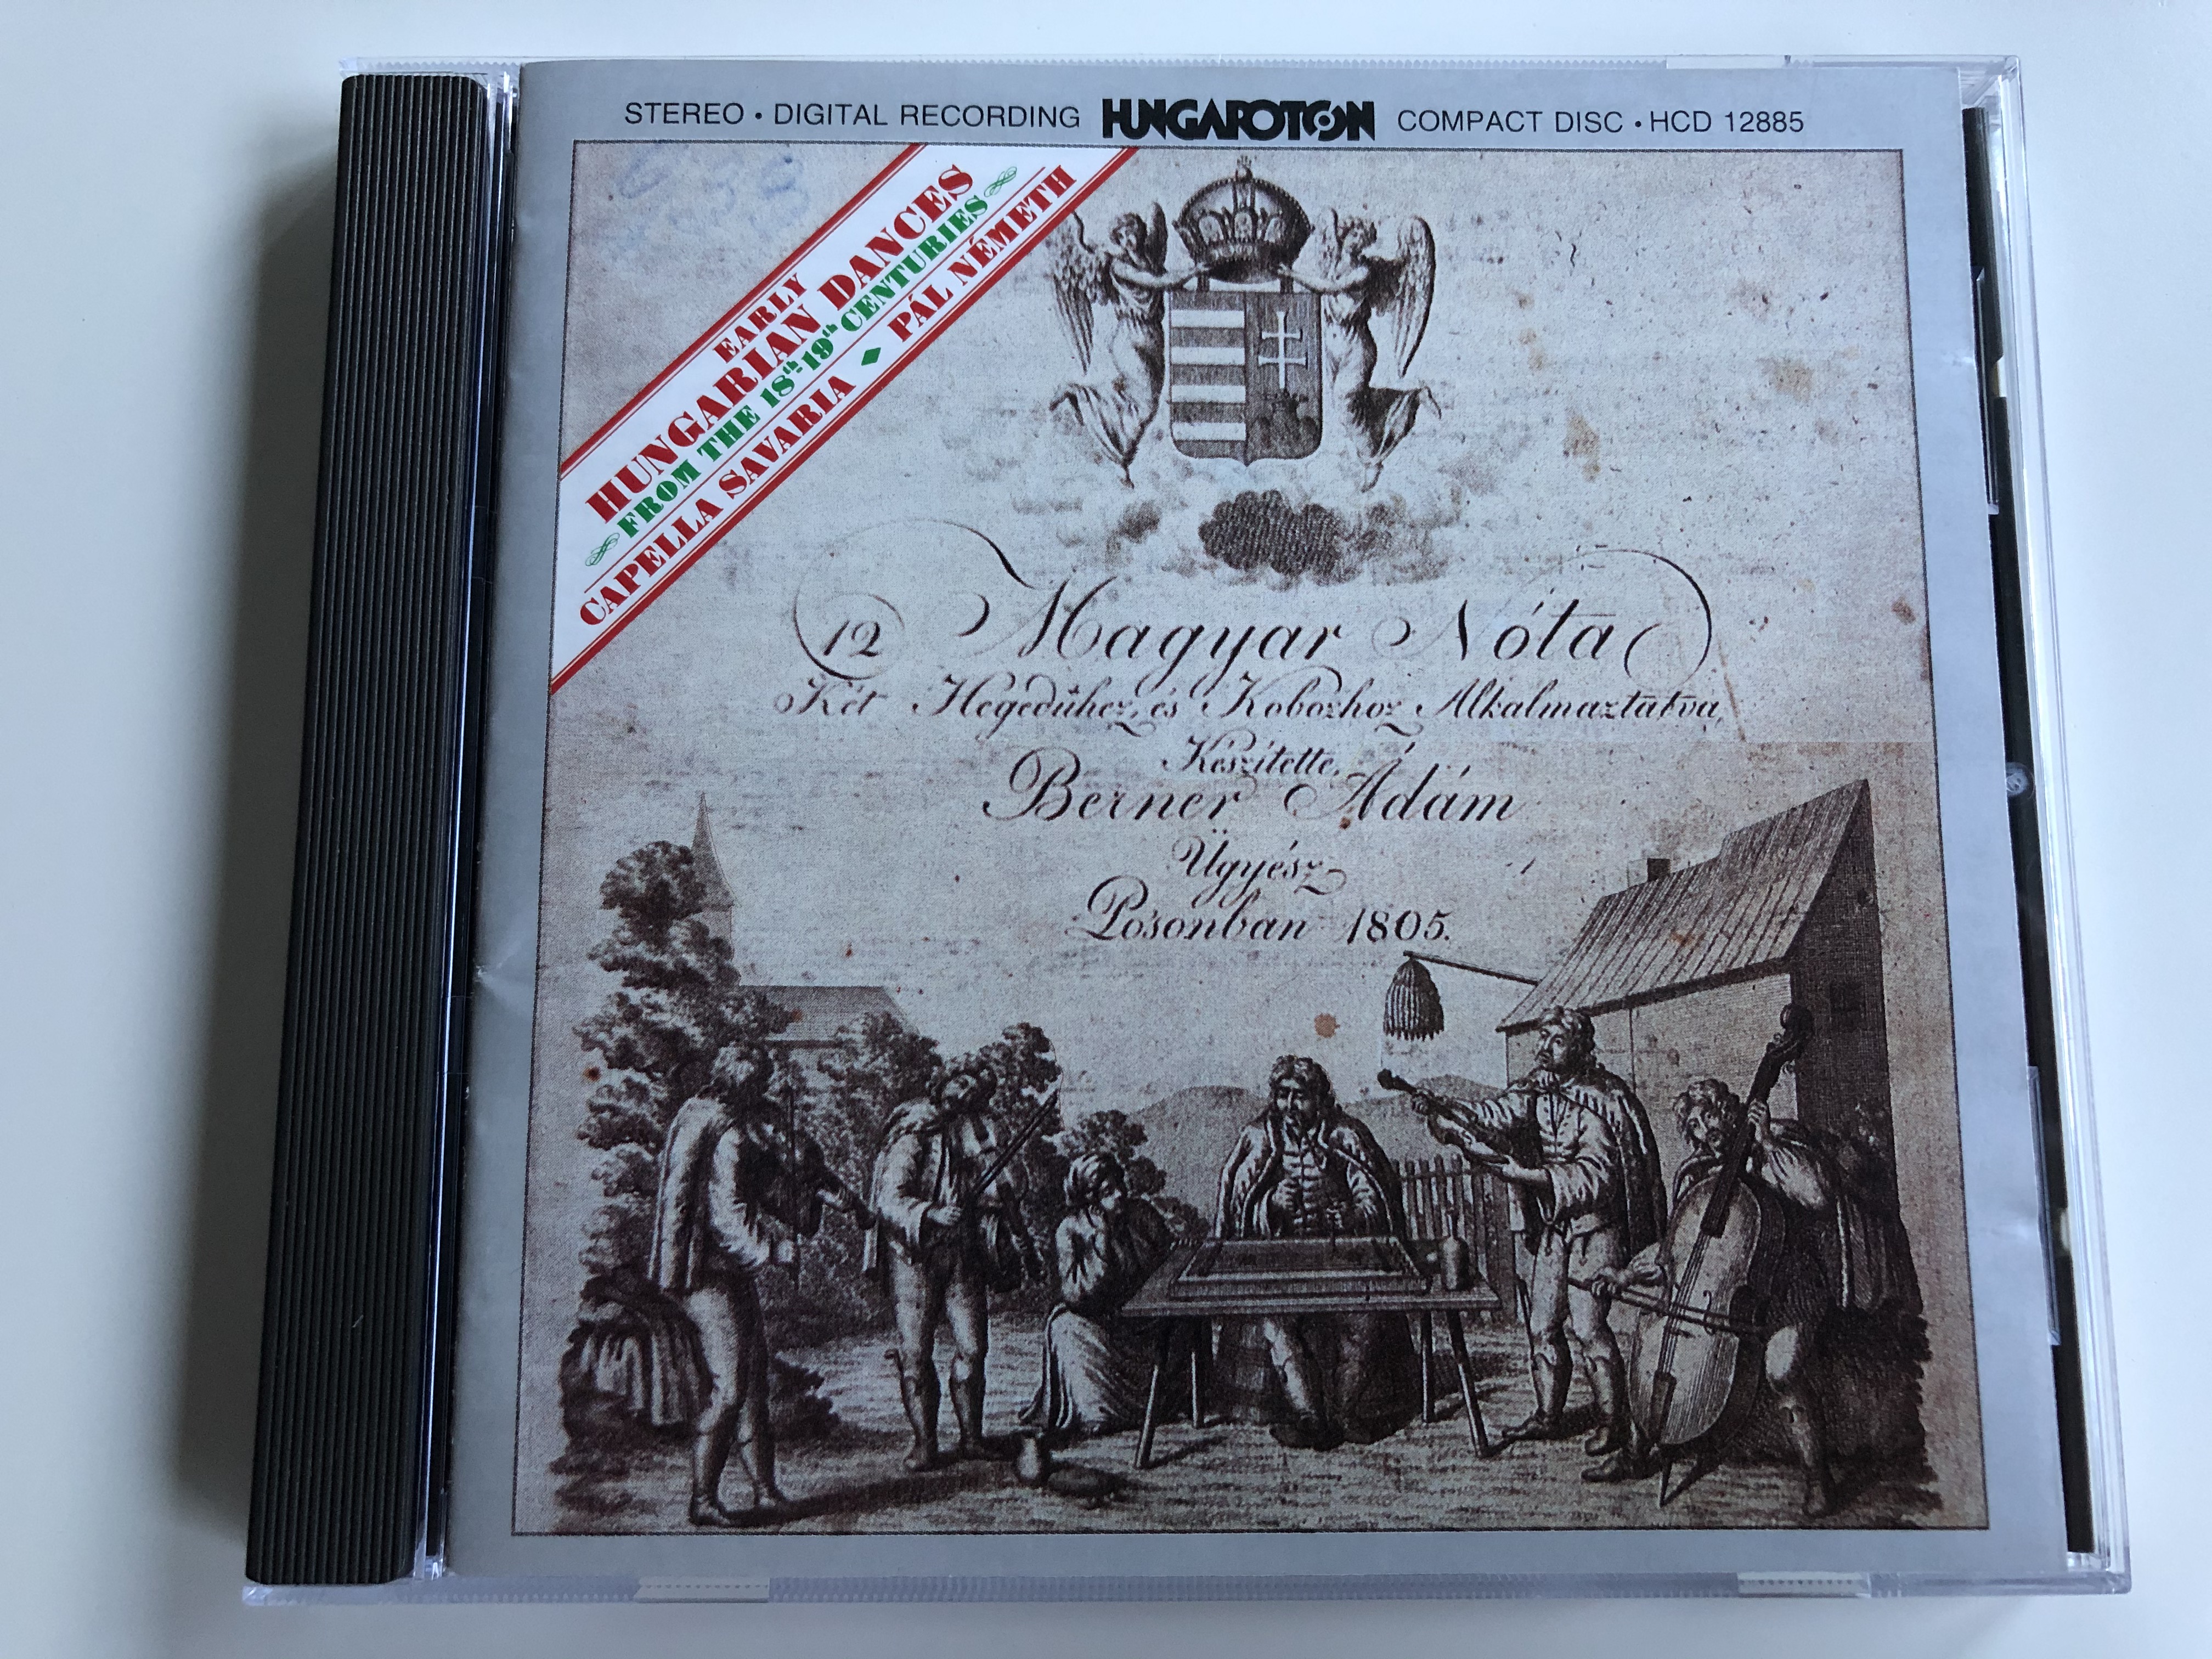 early-hungarian-dances-from-the-18th-19th-centuries-capella-savaria-p-l-n-meth-magyar-nota-hungaroton-audio-cd-1987-stereo-hcd-12885-1-.jpg